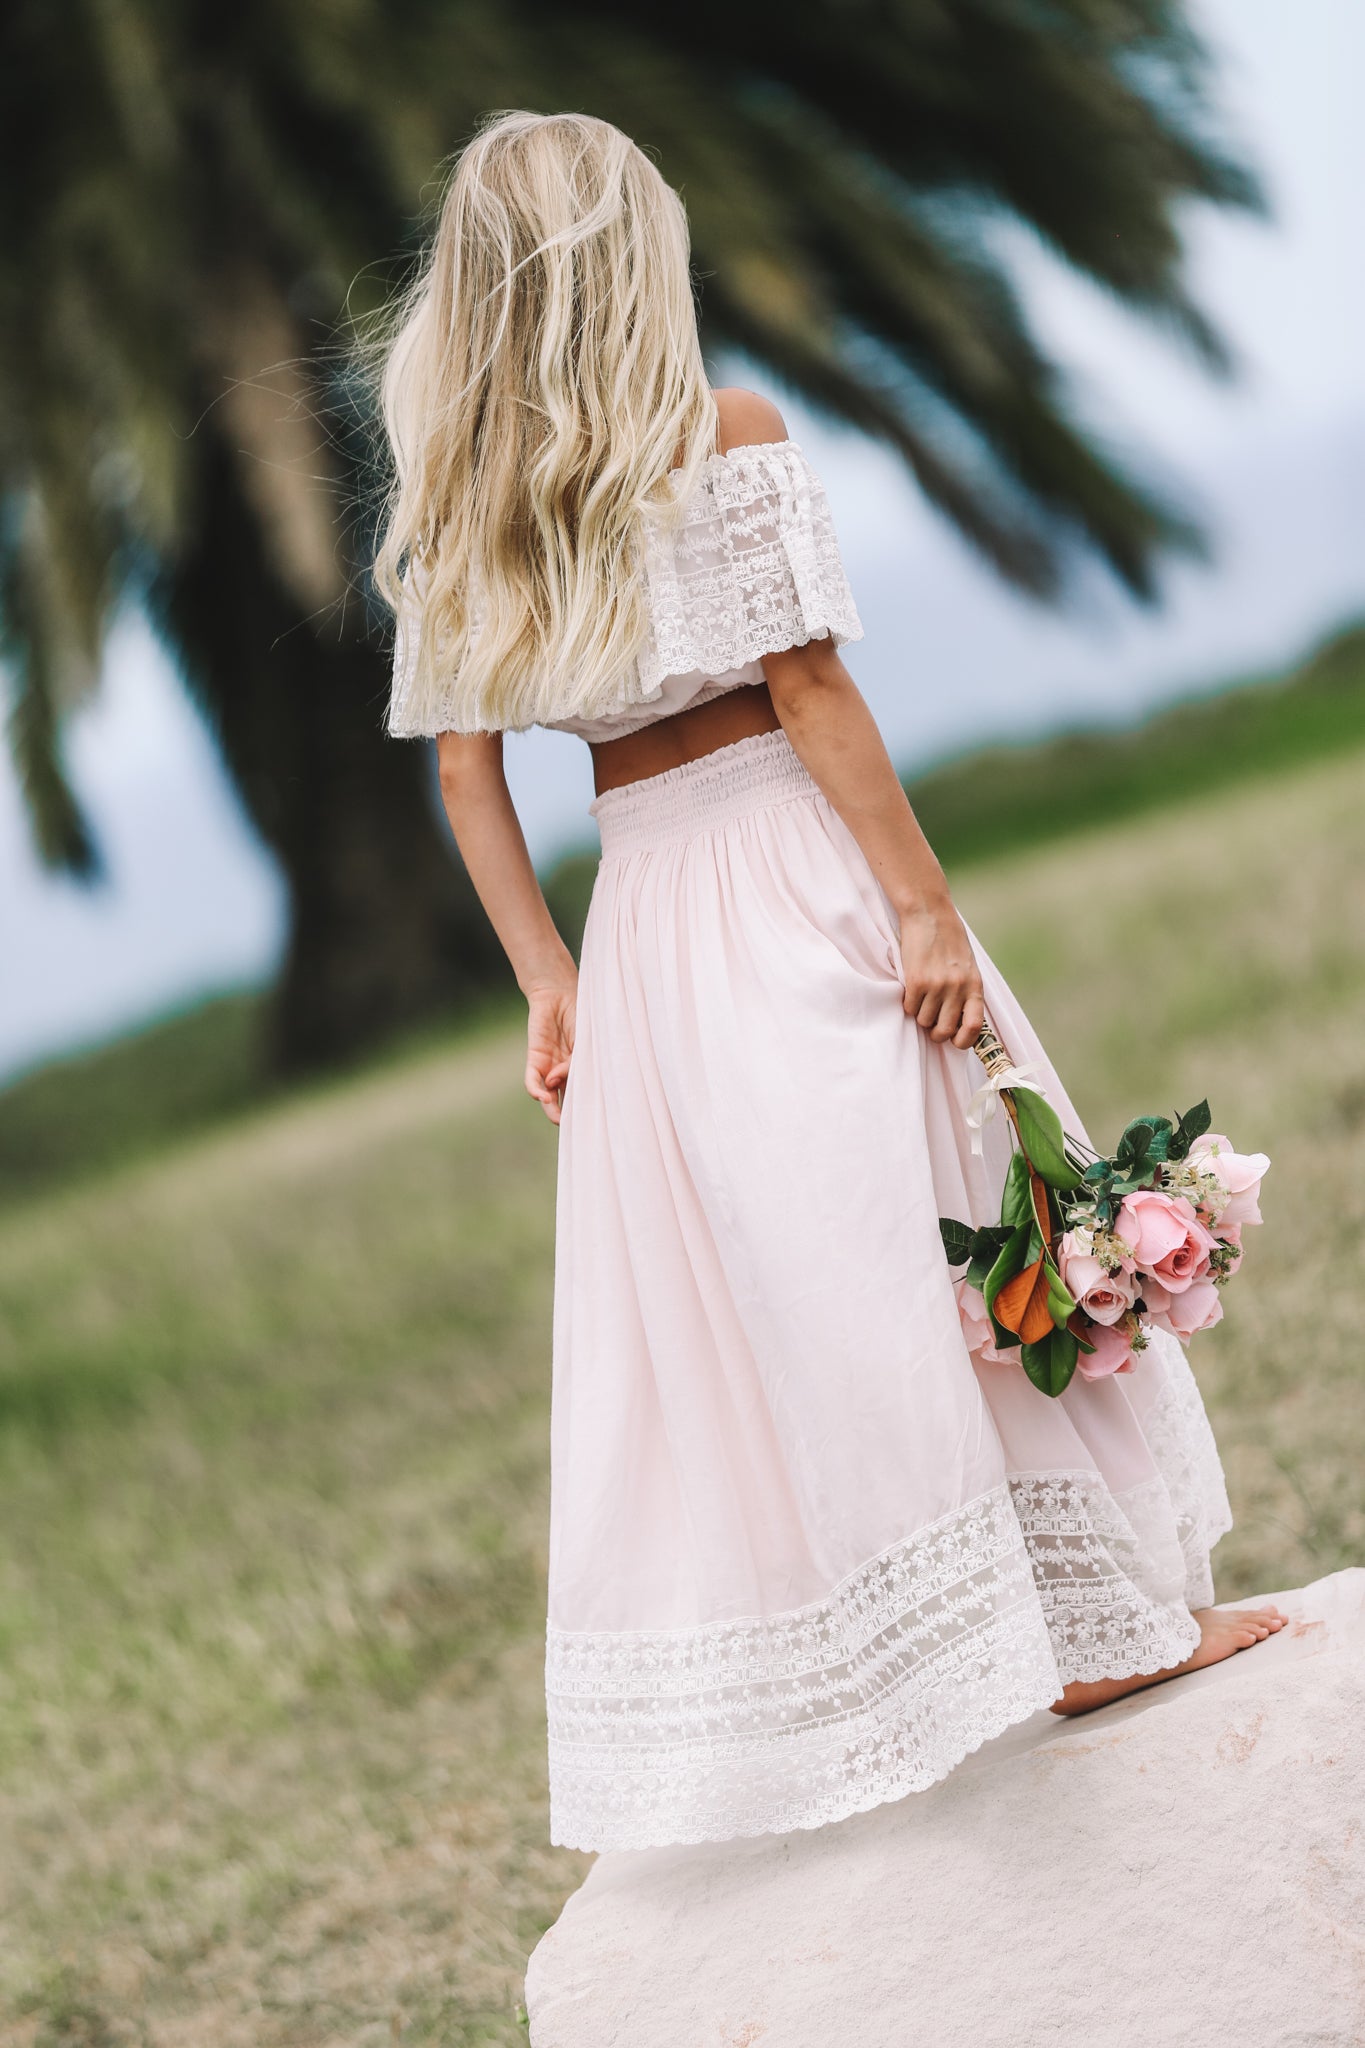 Gorgeous White Two Piece Dress ❤️ | Outfits, Fashion, Two piece dress